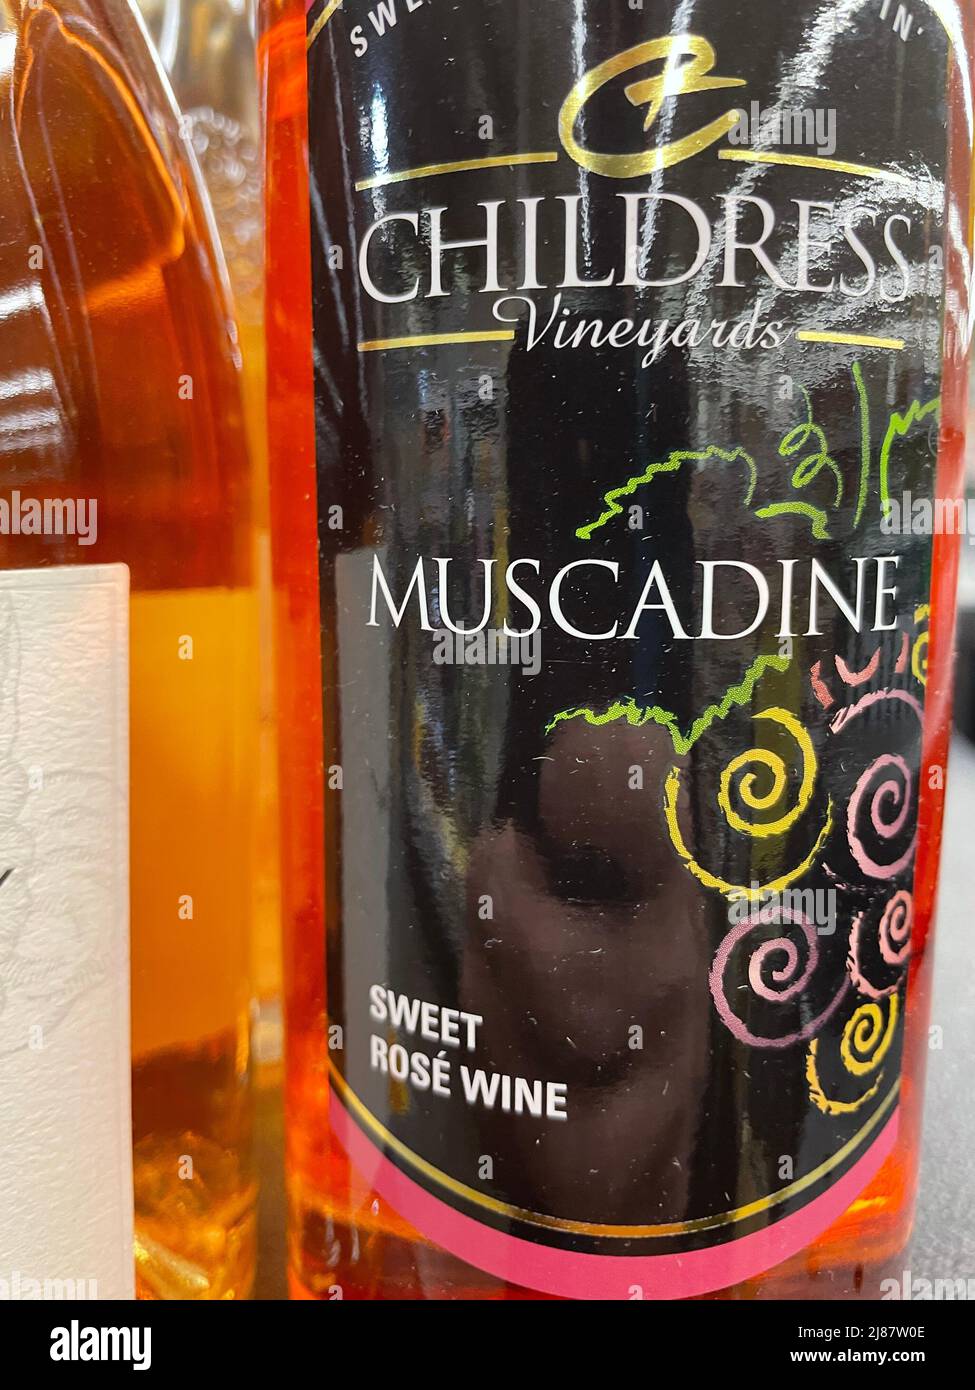 Grovetown, Ga USA - 12 15 21: Wine on a retail store shelf Childress Muscadine Stock Photo